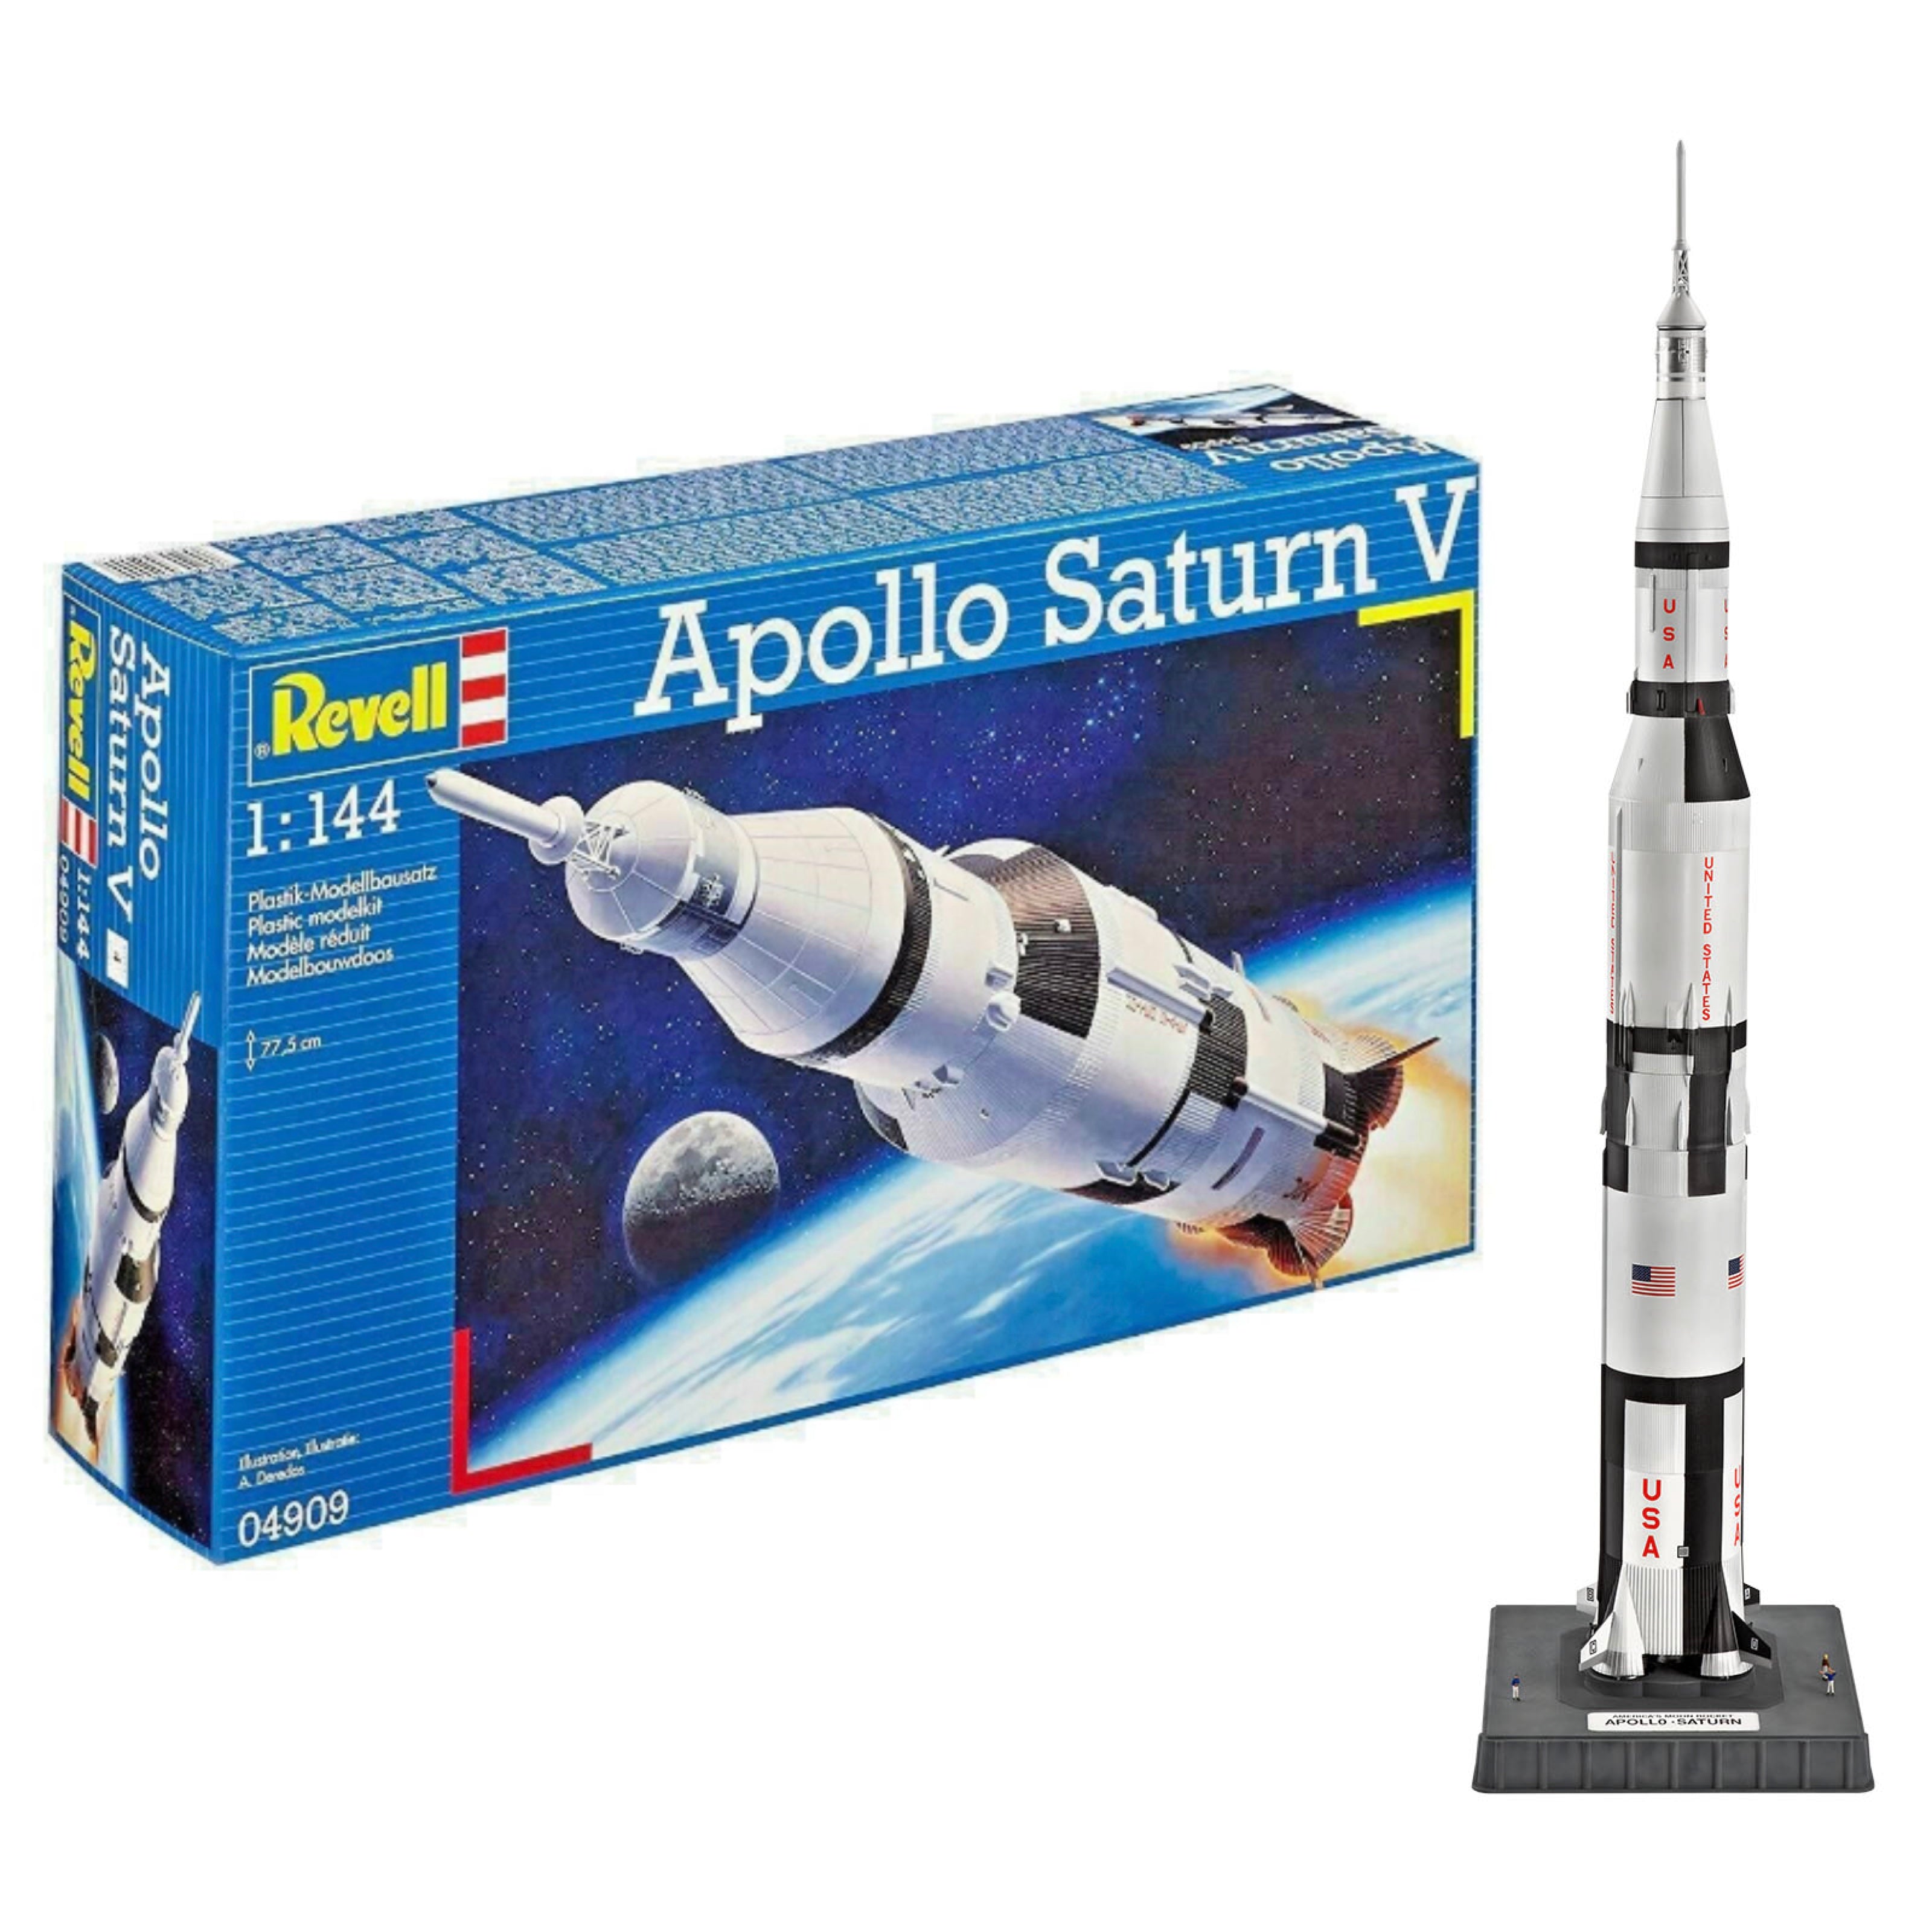 Revell Apollo Saturn V 1:144 Scale Rocket Model Kit